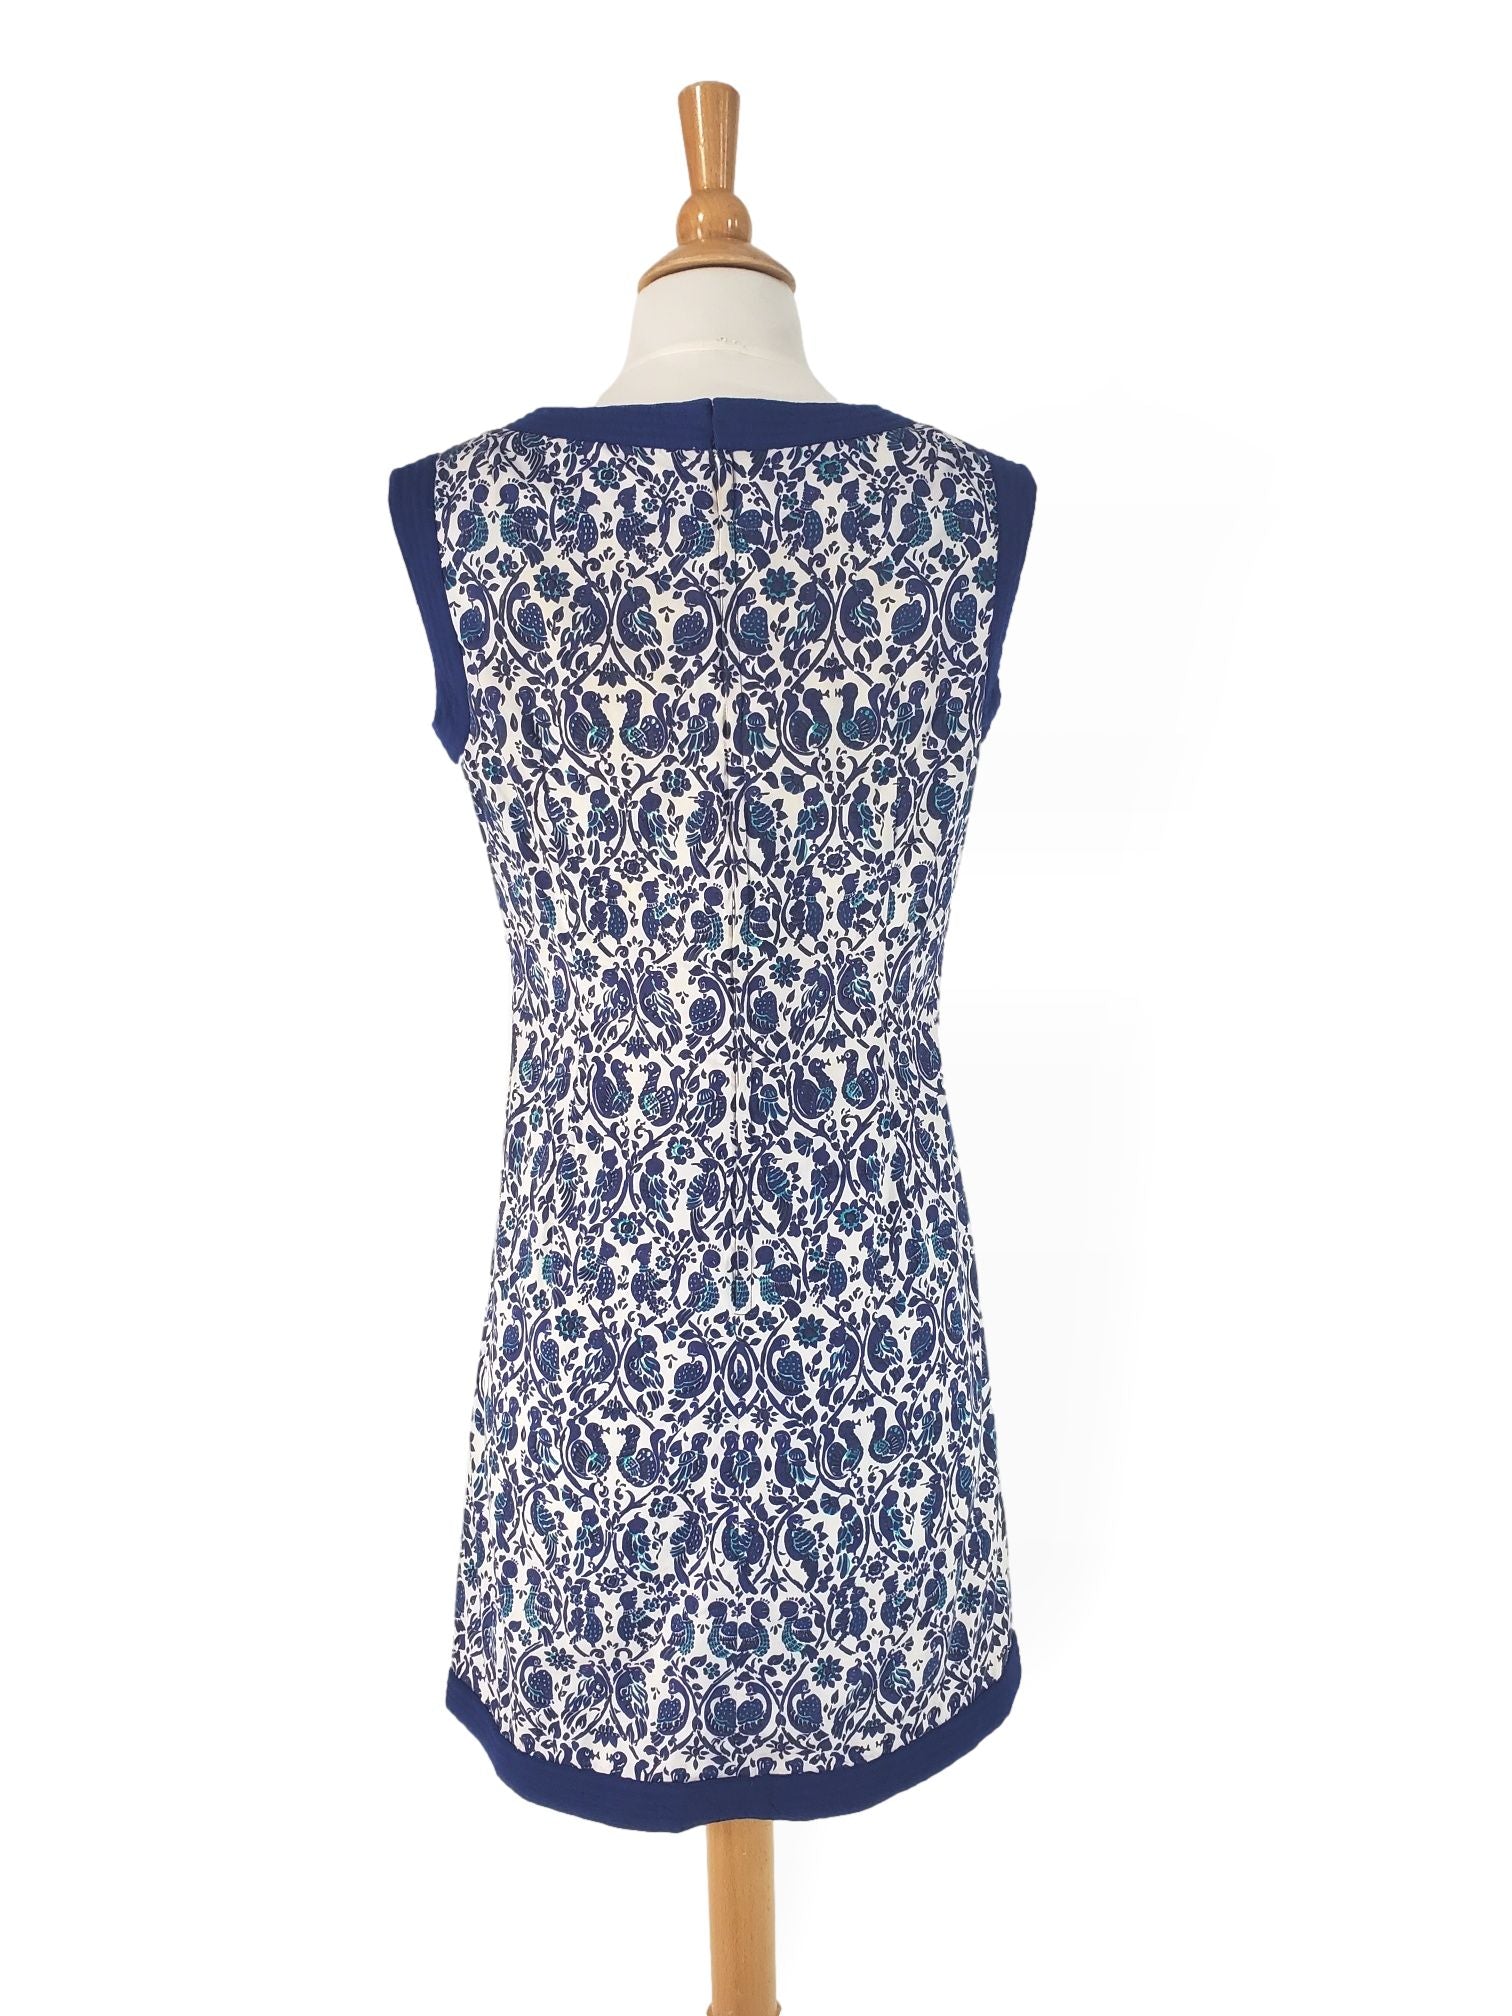 60s Cotton Shift Dress in Blue Batik Print - sm, med – Better Dresses ...